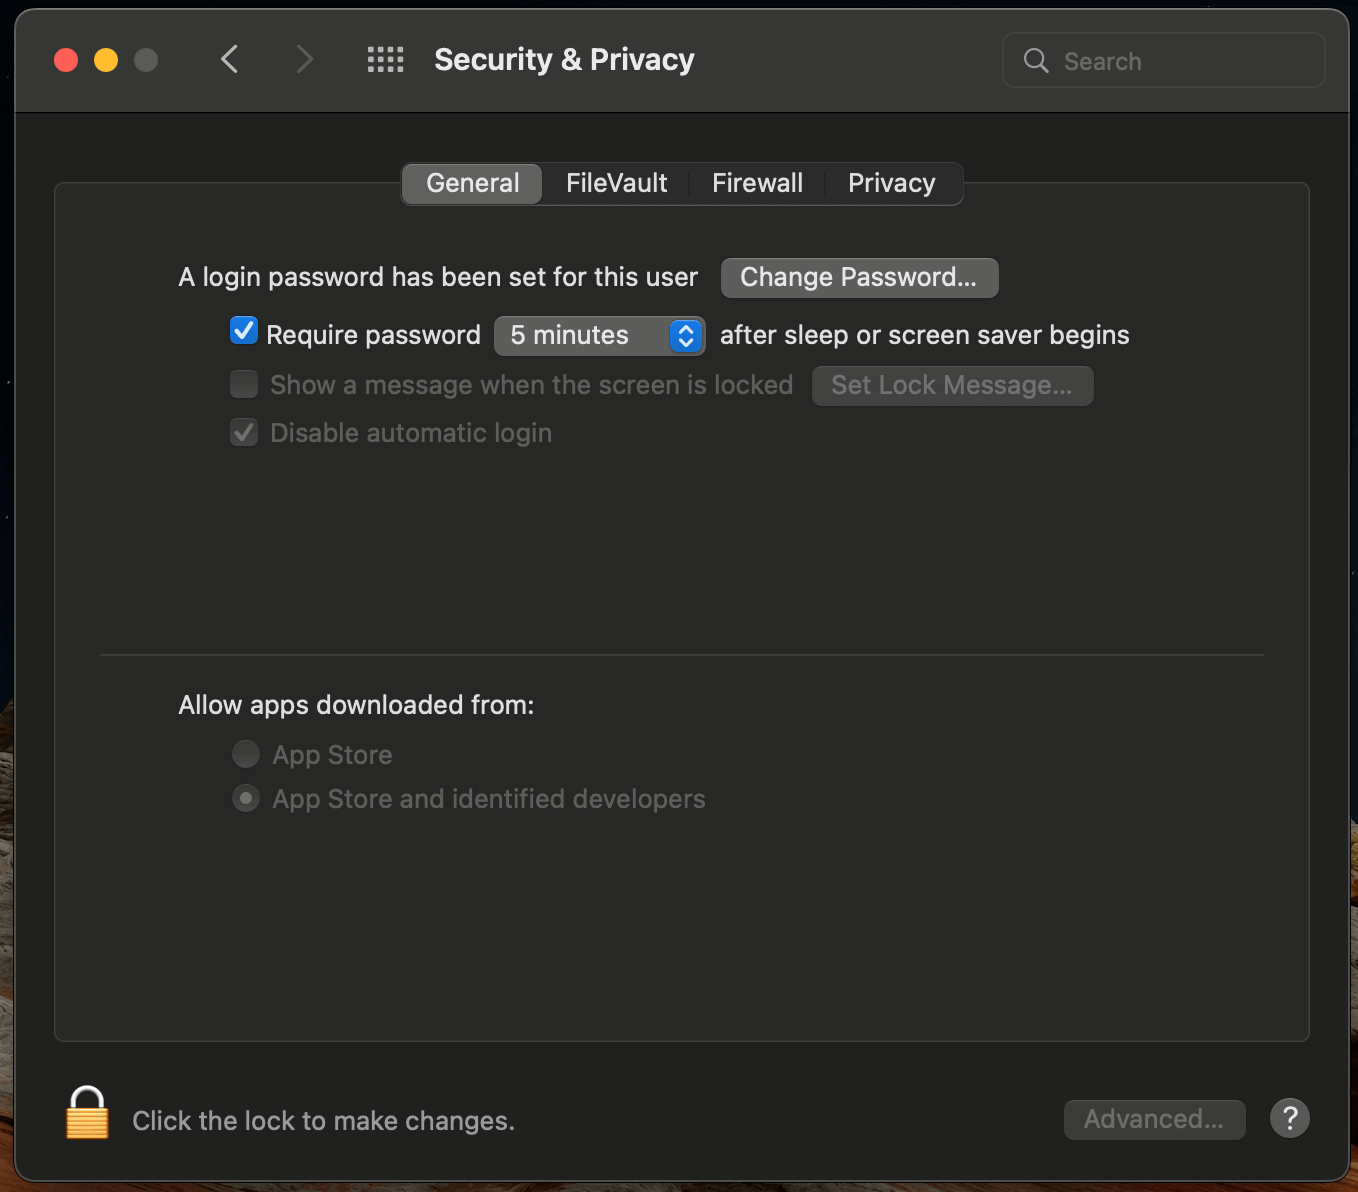 how to lock keyboard on mac, how to lock mac keyboard, how to unlock keyboard on mac, how to unlock mac keyboard, lock macbook keyboard